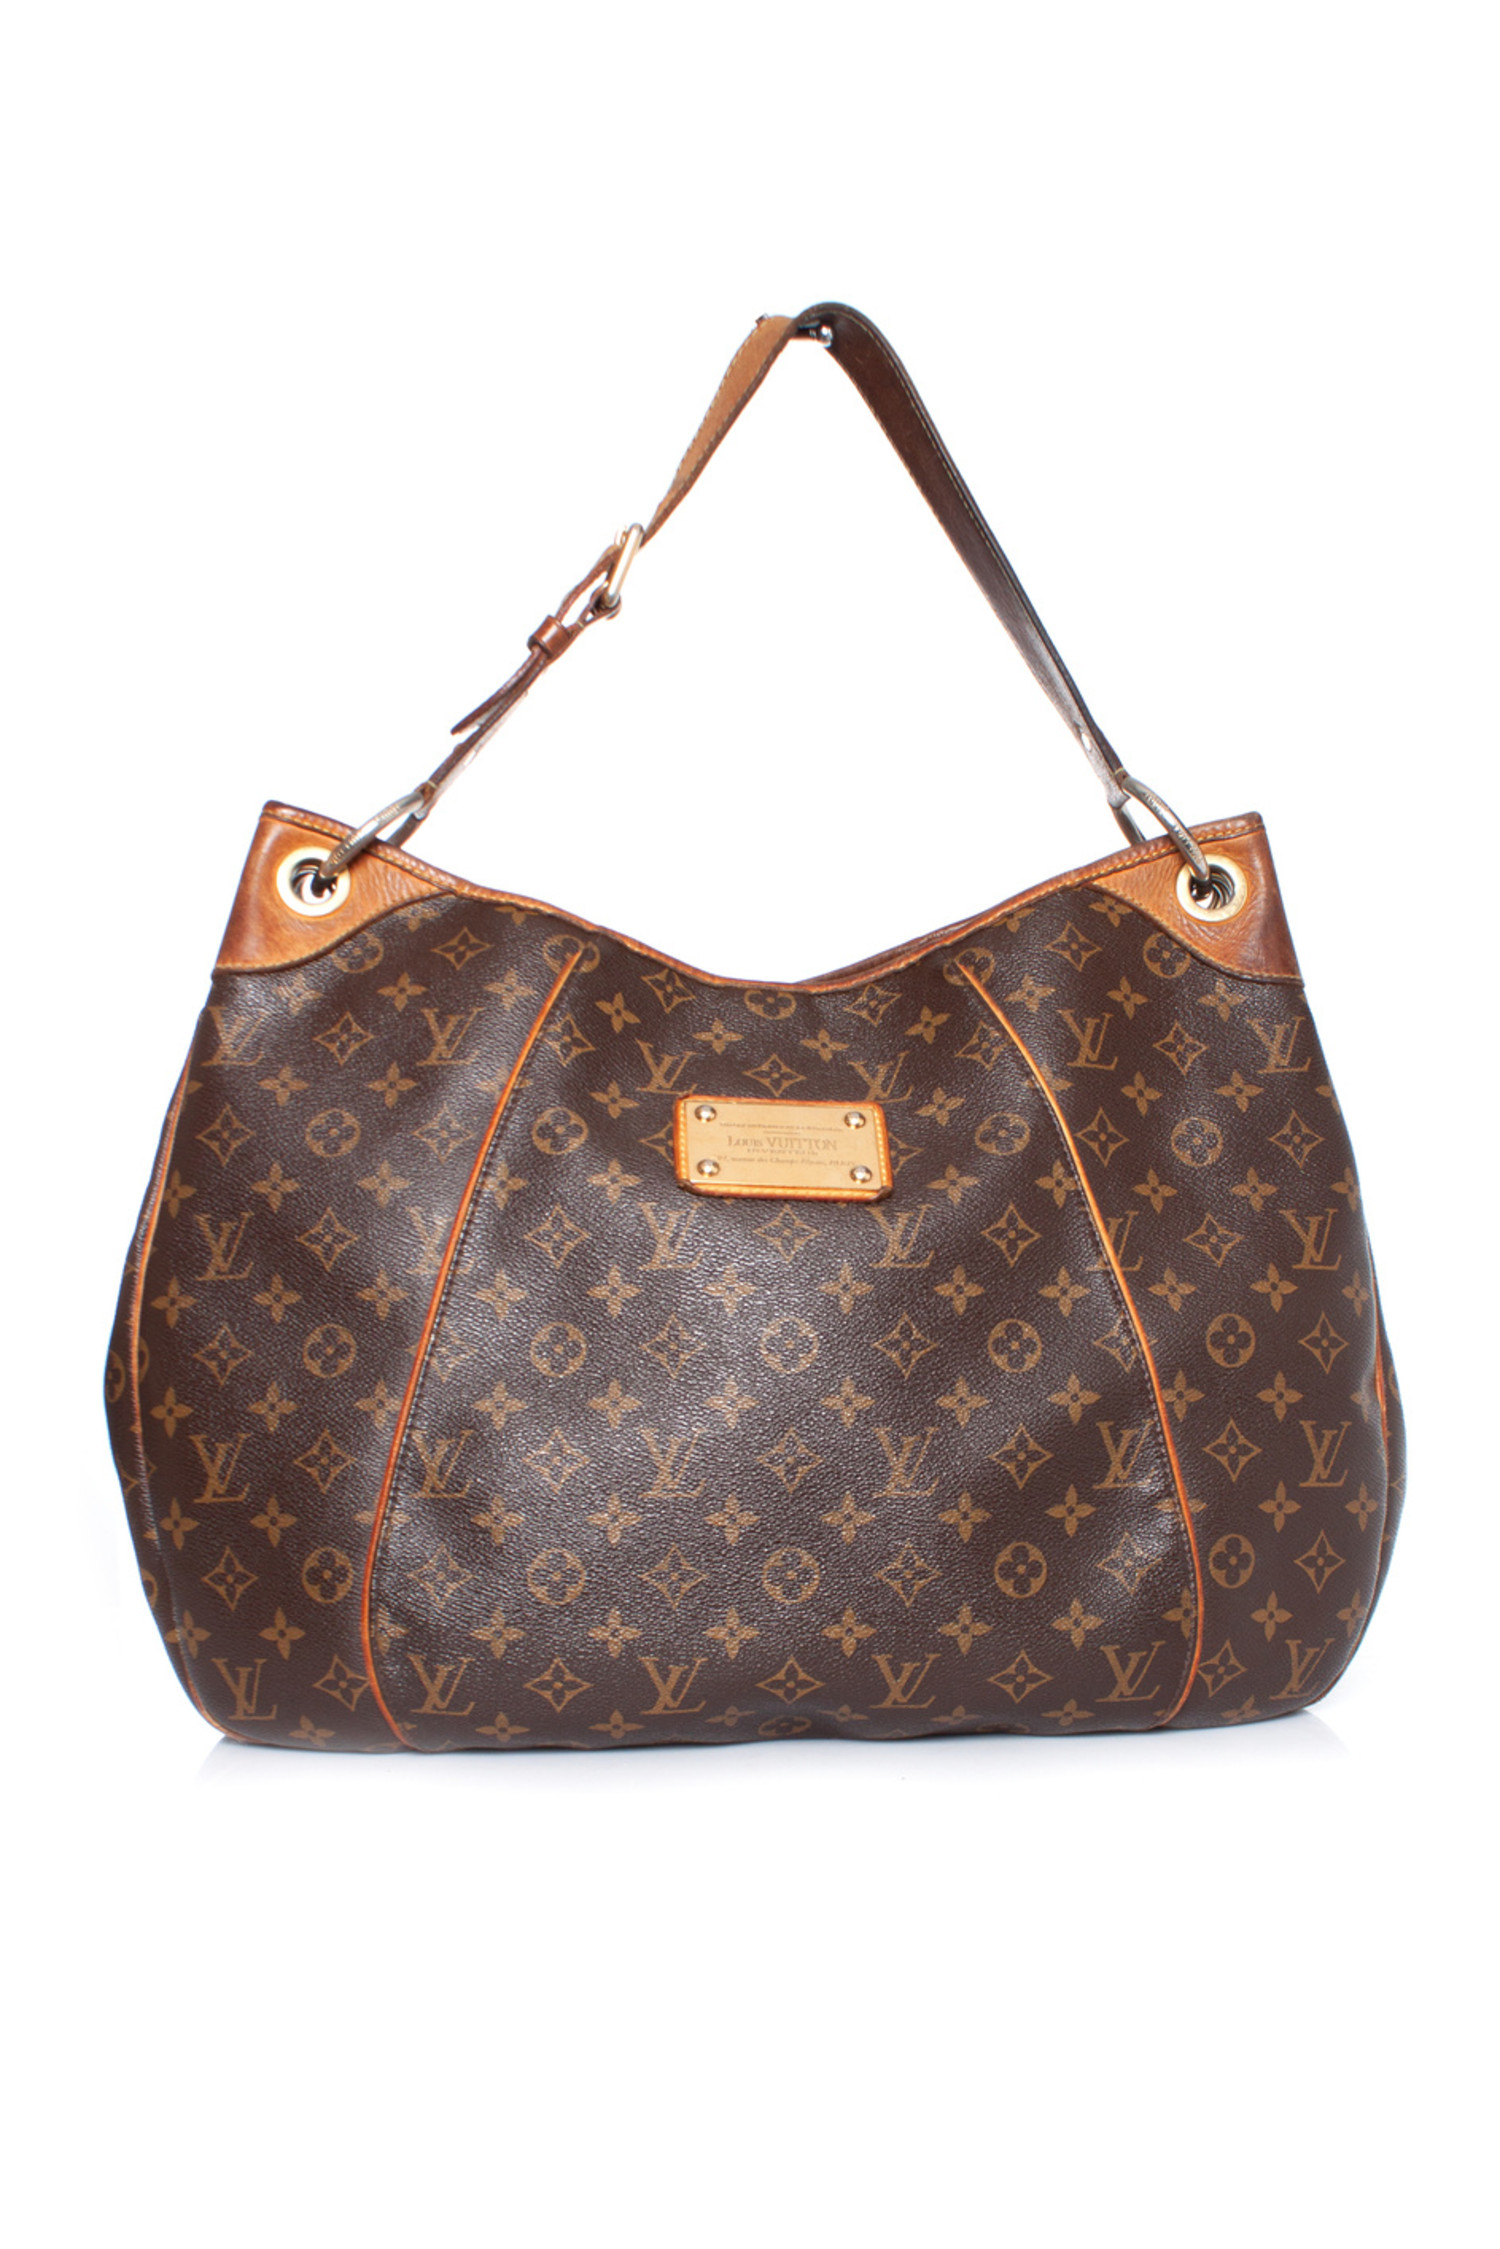 Authentic Louis Vuitton Galleria GM Monogram Shoulder Handbag w